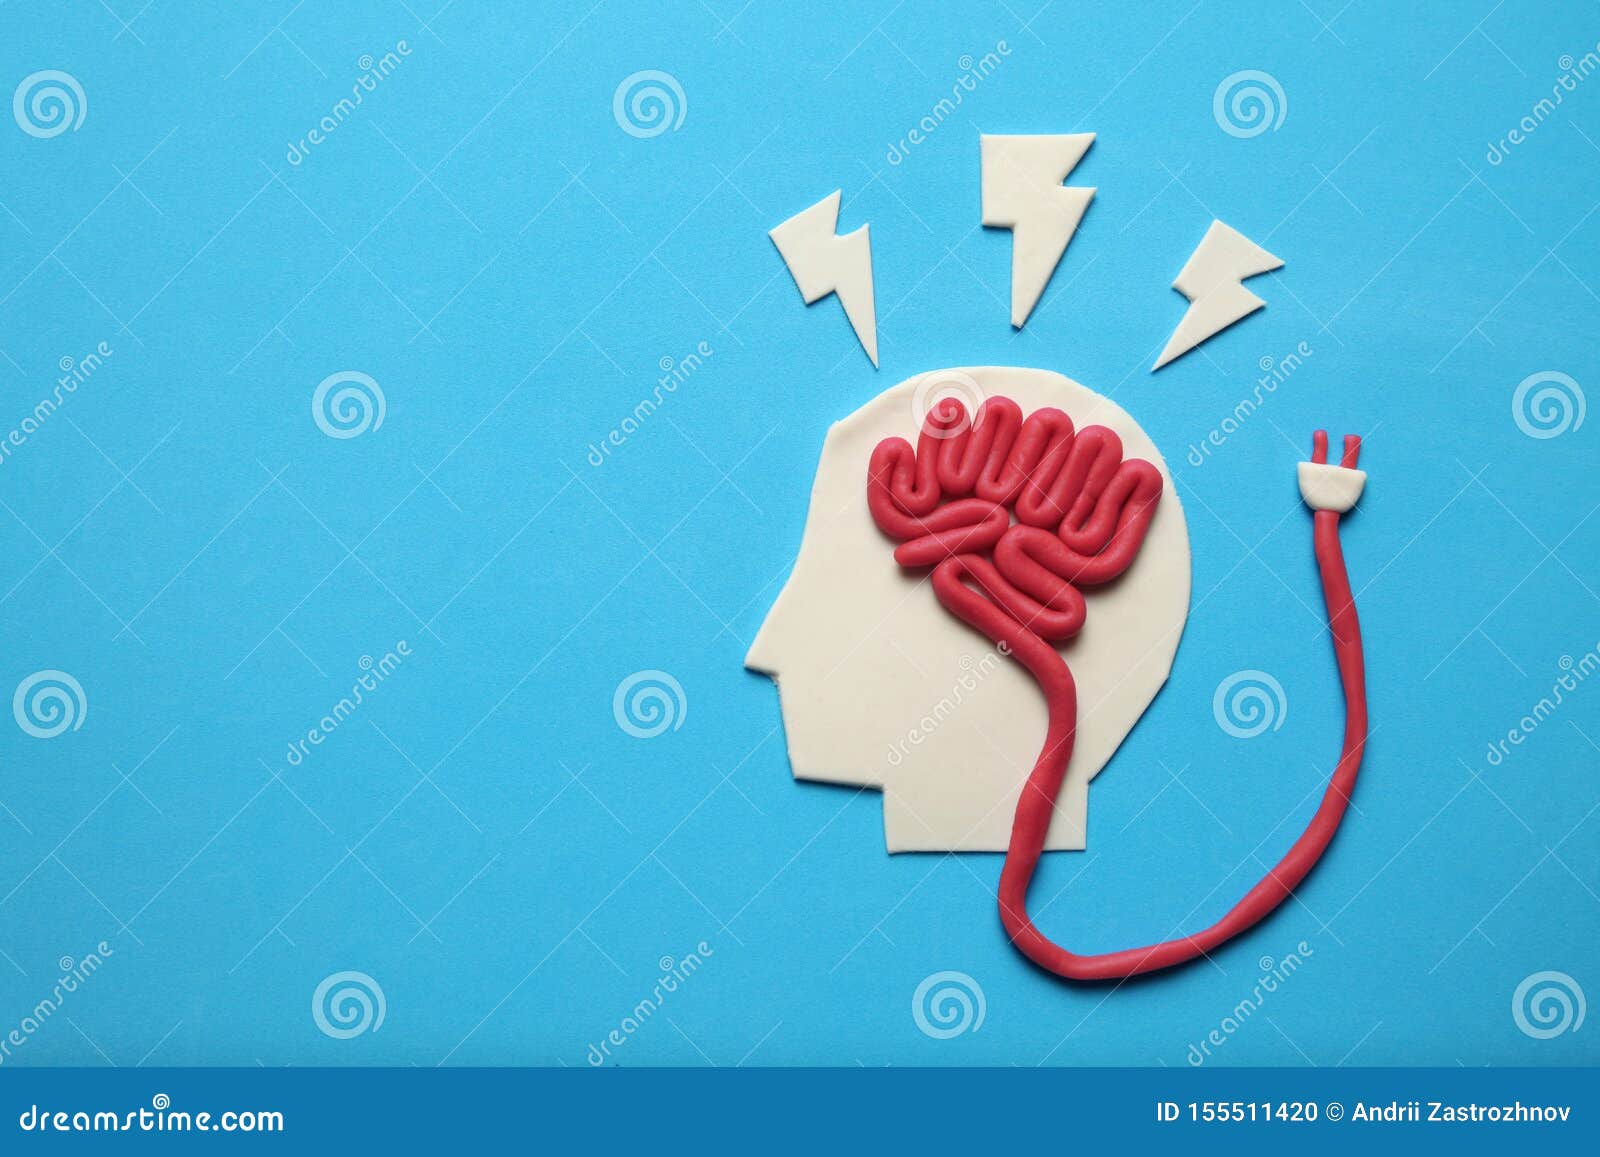 plasticine head and brain concept. smart mind, neurology knowledge